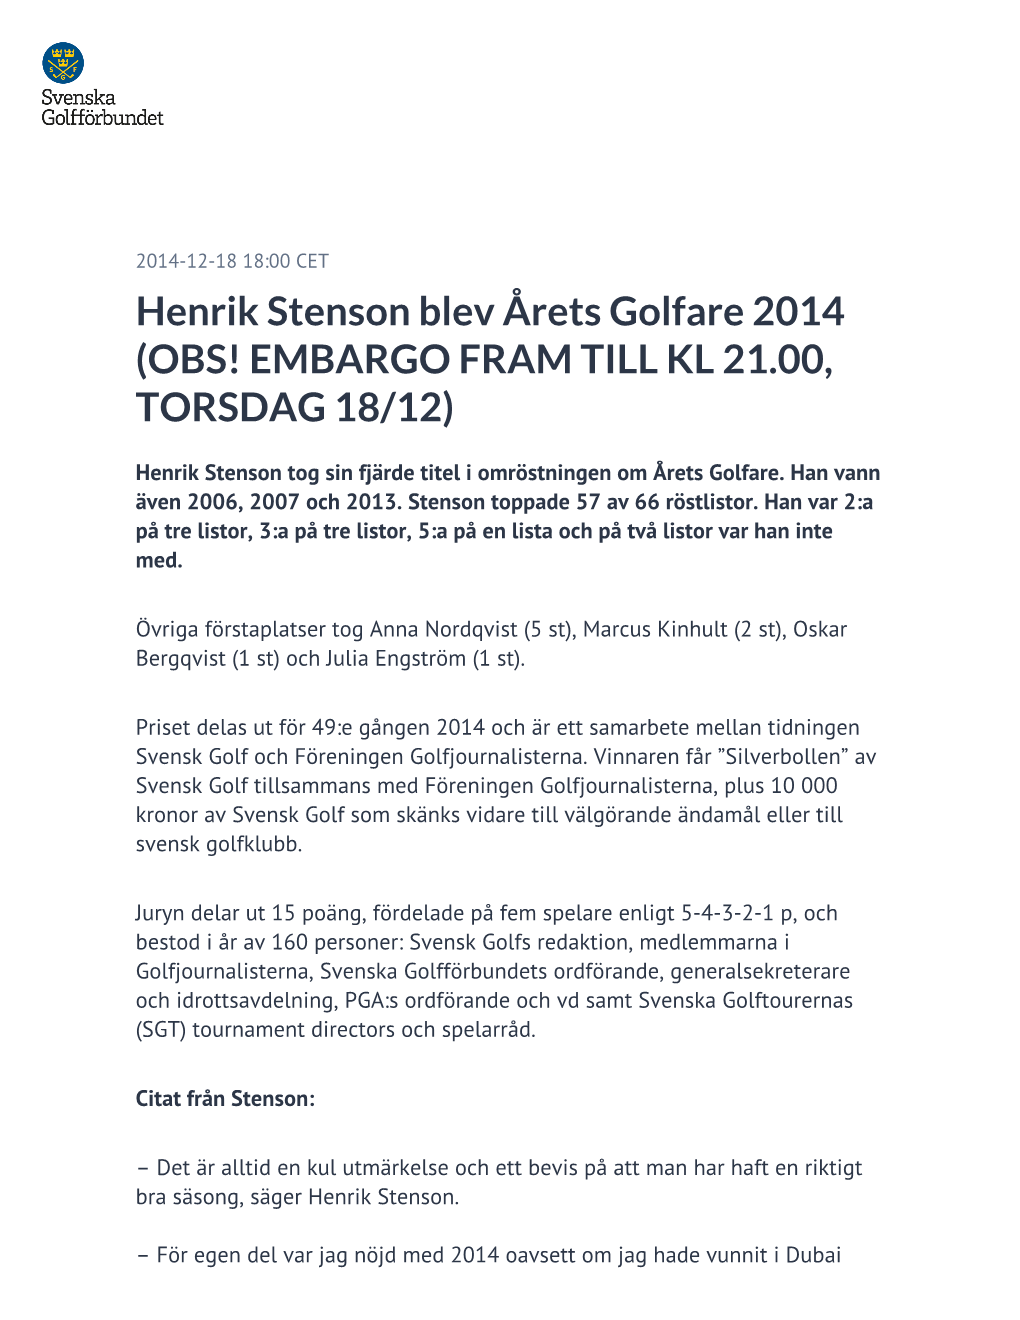 Henrik Stenson Blev Årets Golfare 2014 (OBS! EMBARGO FRAM TILL KL 21.00, TORSDAG 18/12)